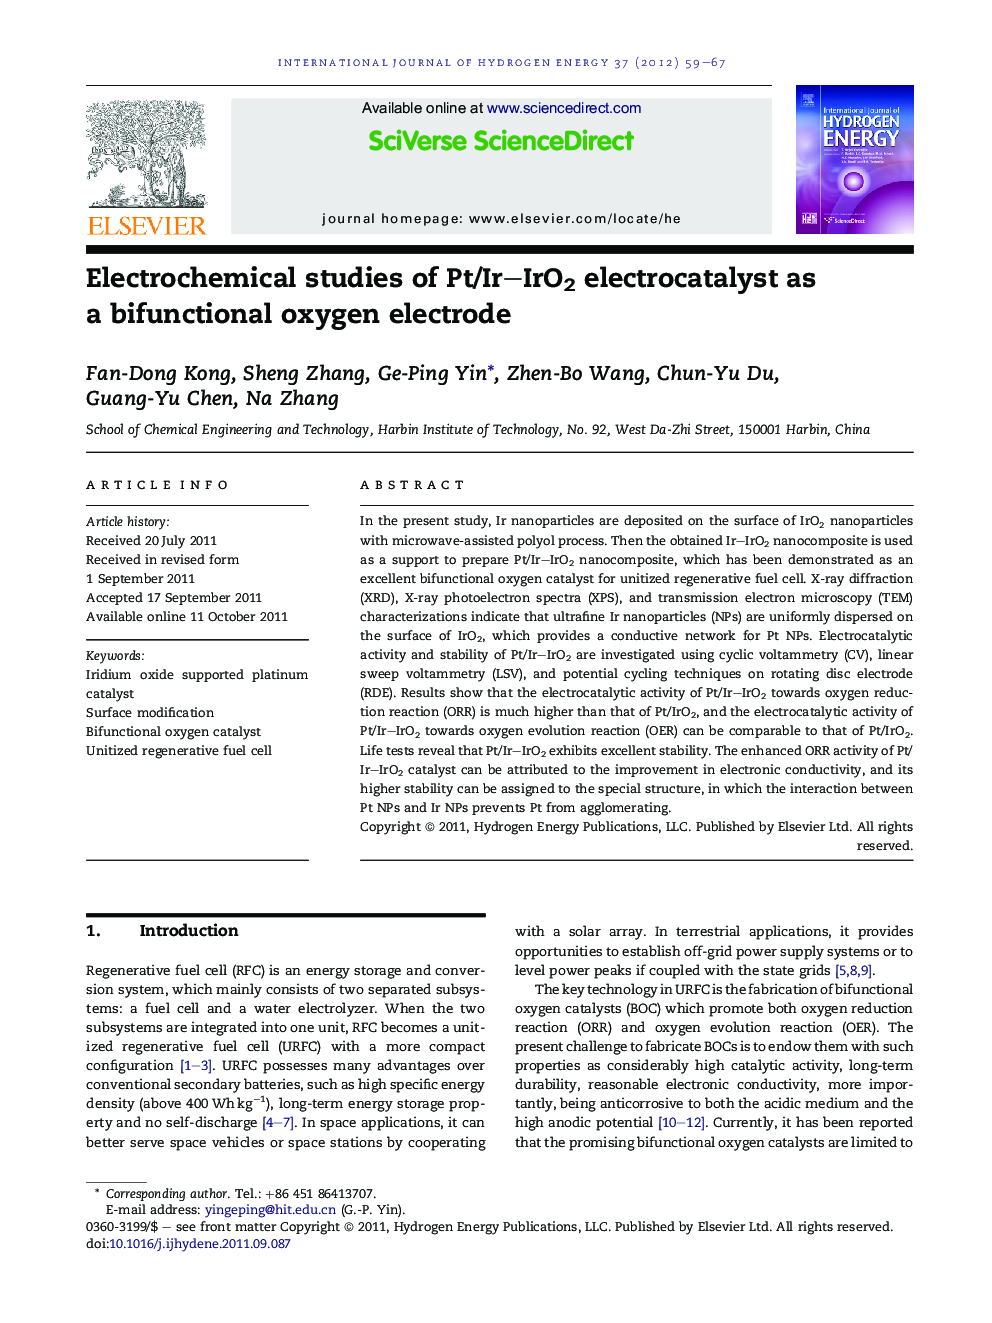 Electrochemical studies of Pt/Ir–IrO2 electrocatalyst as a bifunctional oxygen electrode